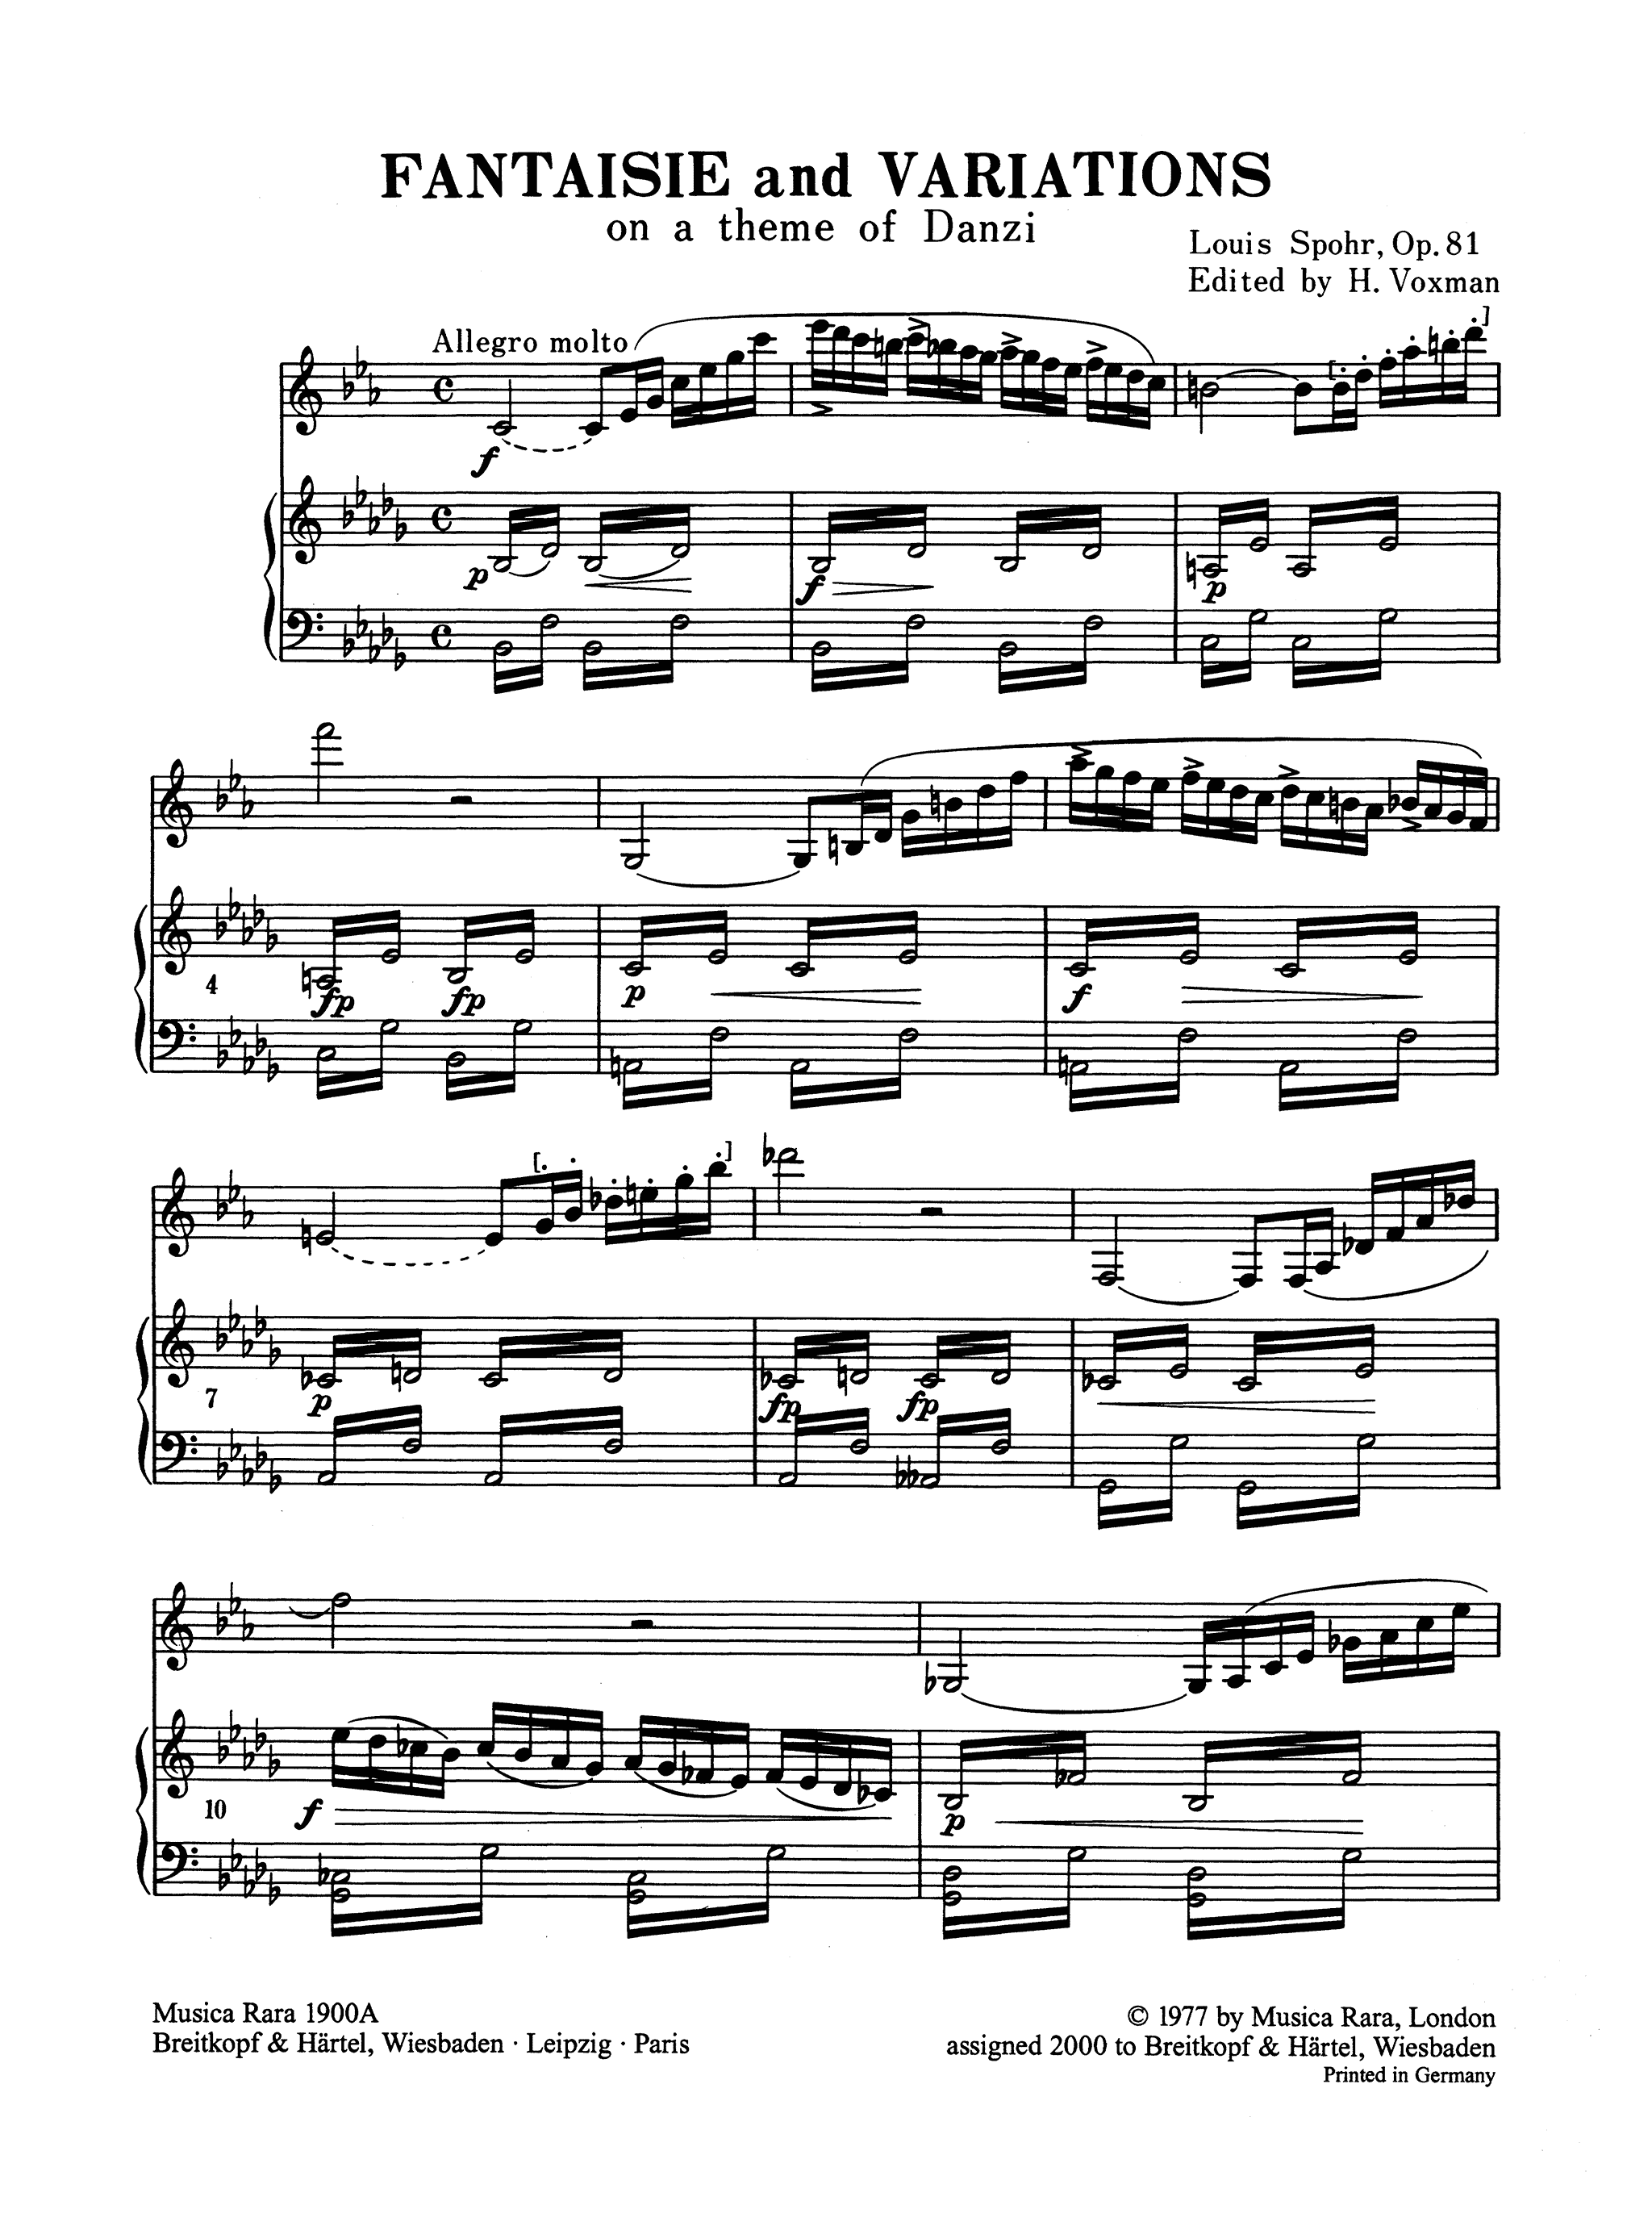 Spohr Fantaisie & Variations on Danzi Theme, Op. 81 Score